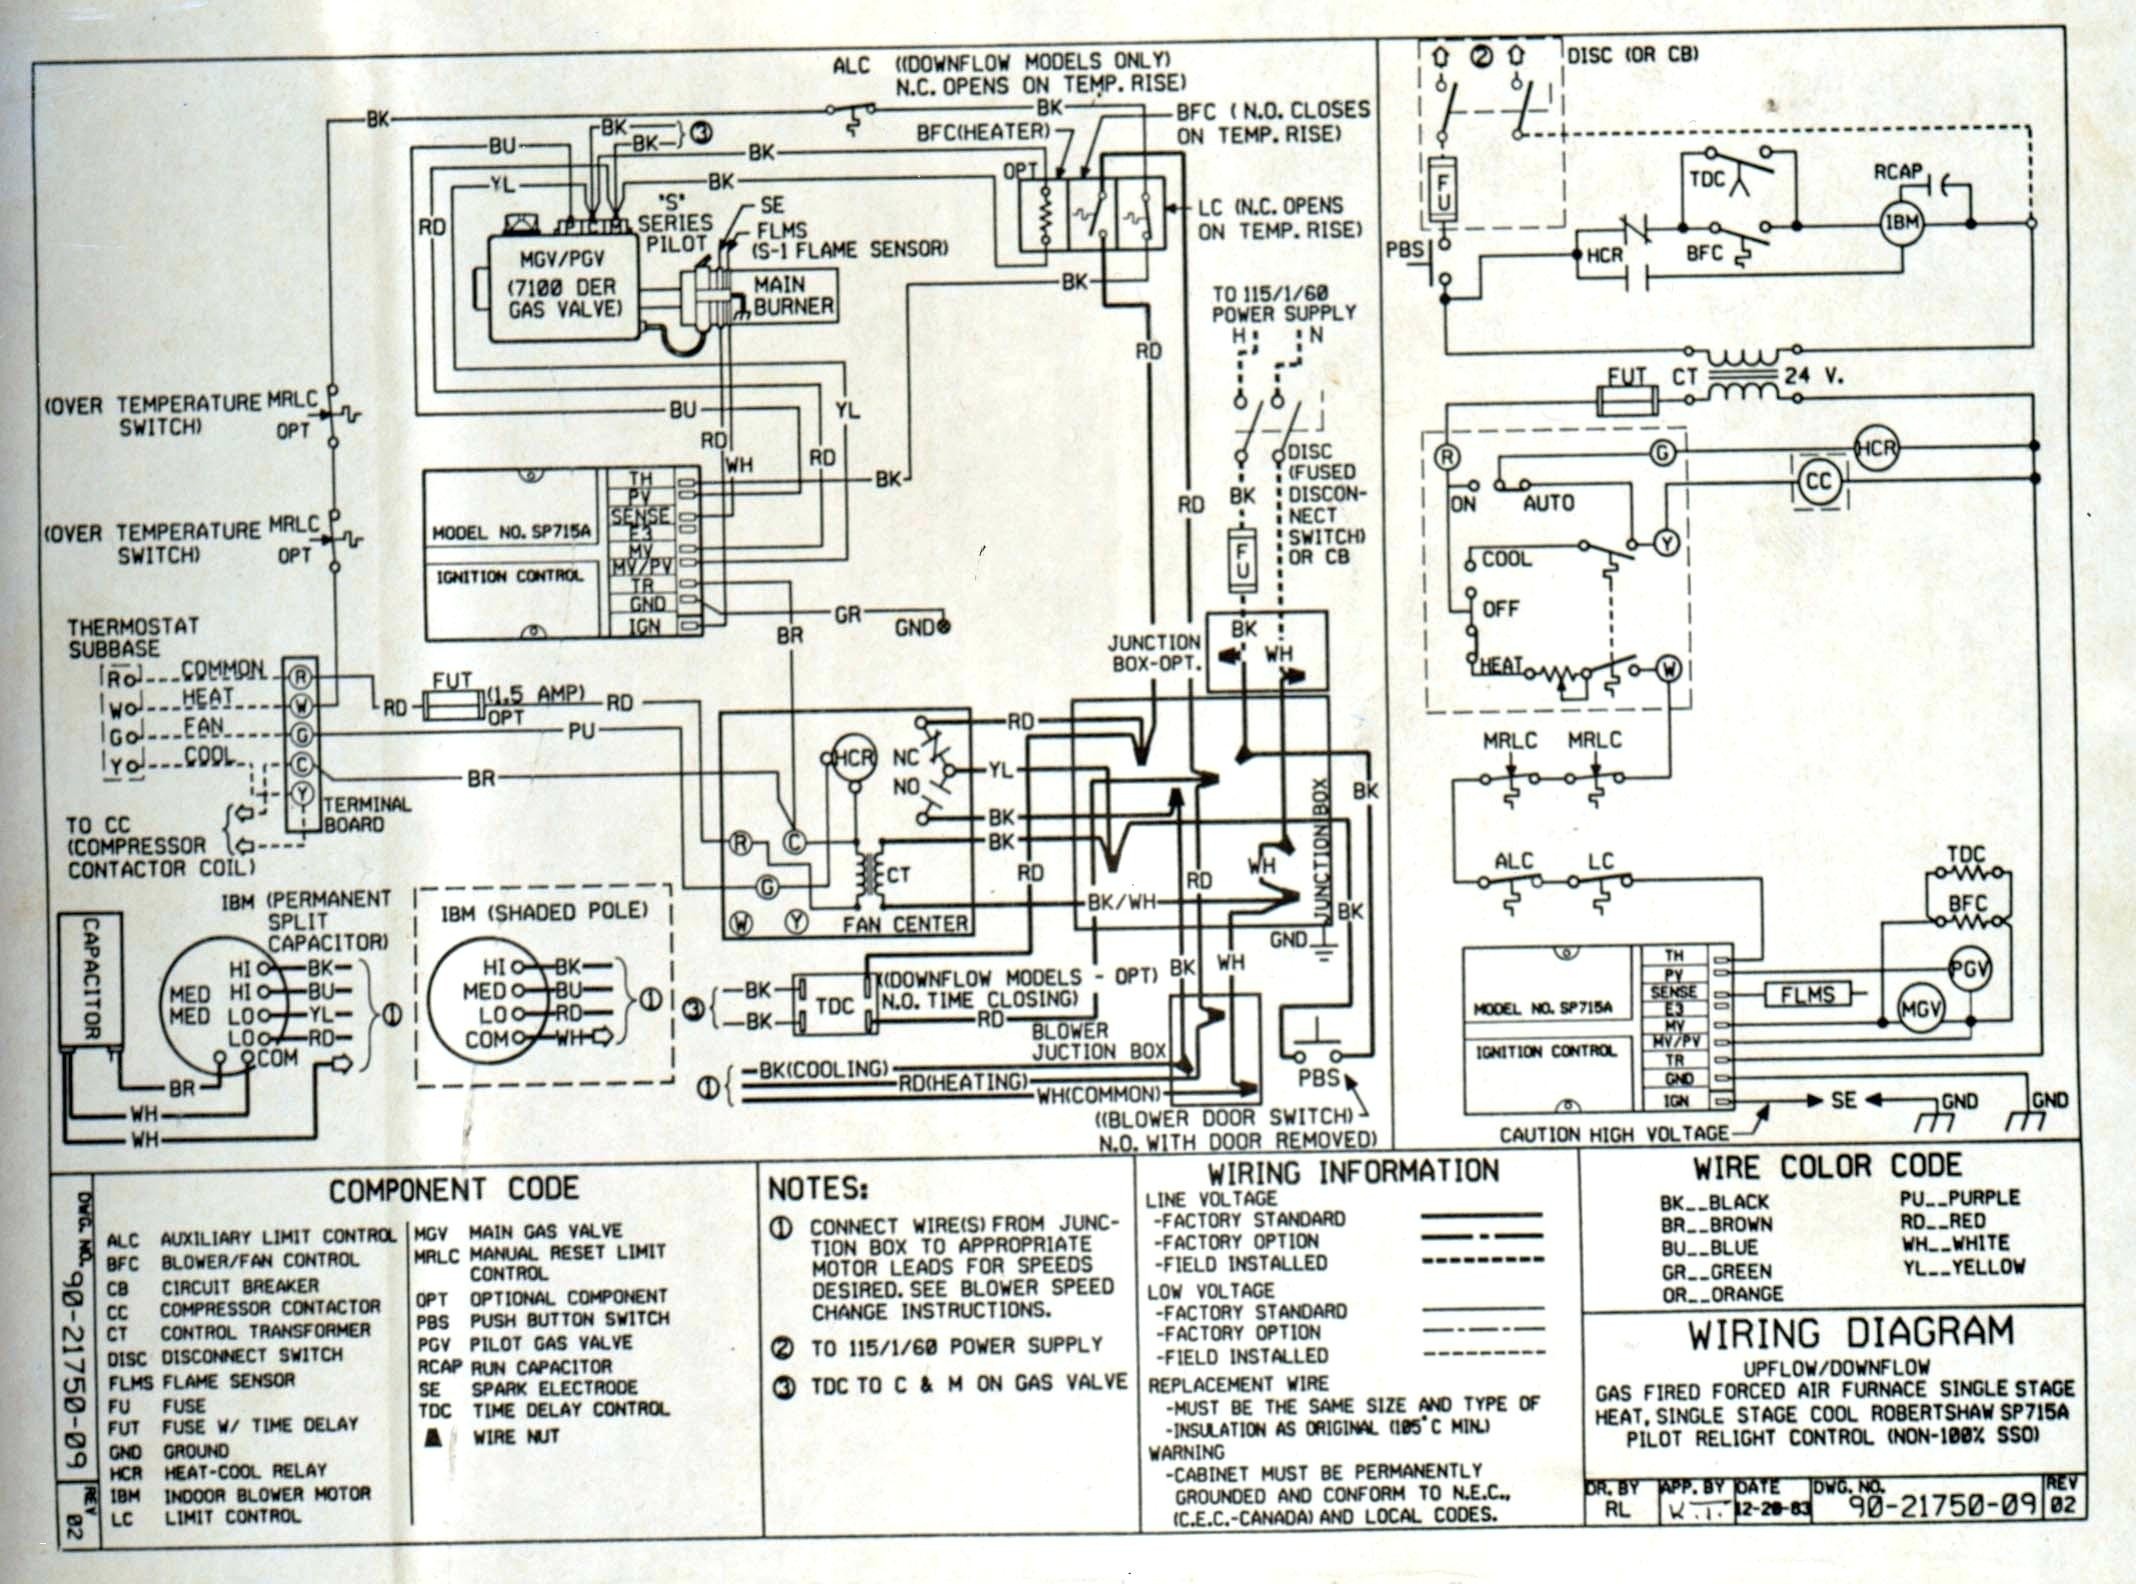 Wiring Diagram for Ac Blower Motor Inspirationa Furnace Blower Motor Wiring Diagram Best York Electric Furnace